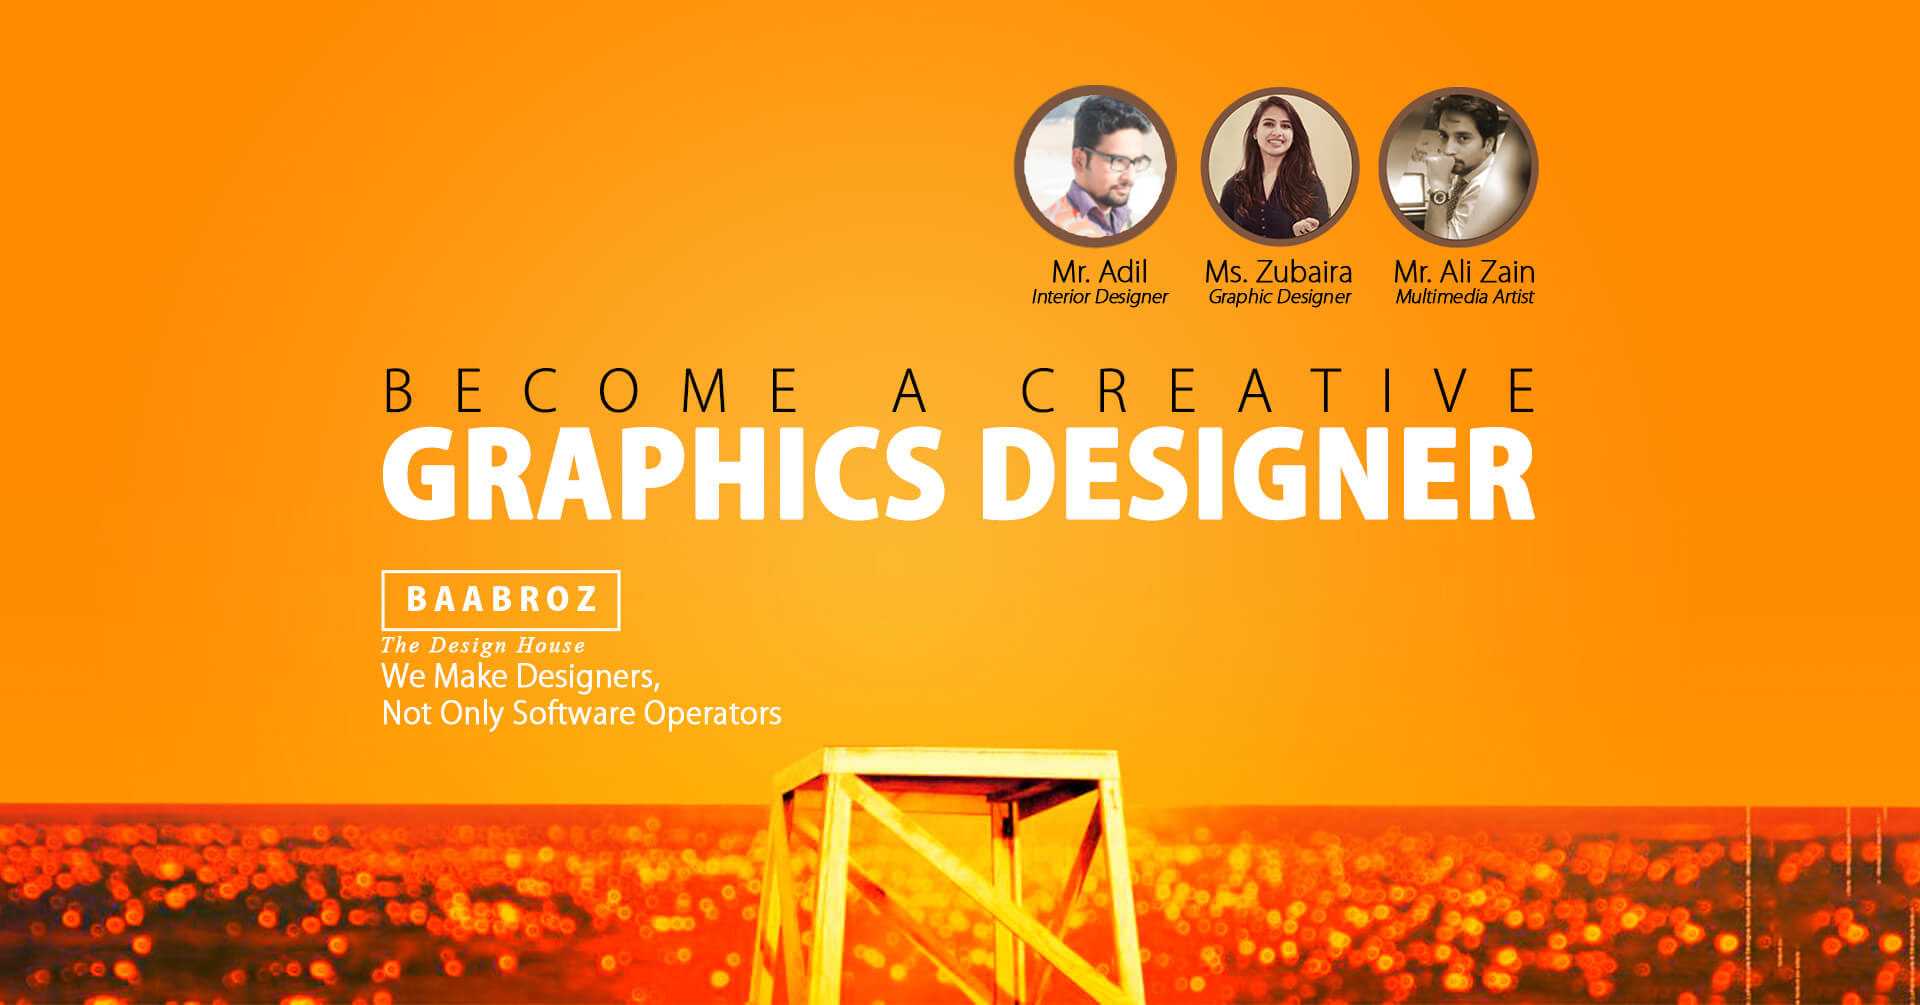 graphic designing courses in lahore